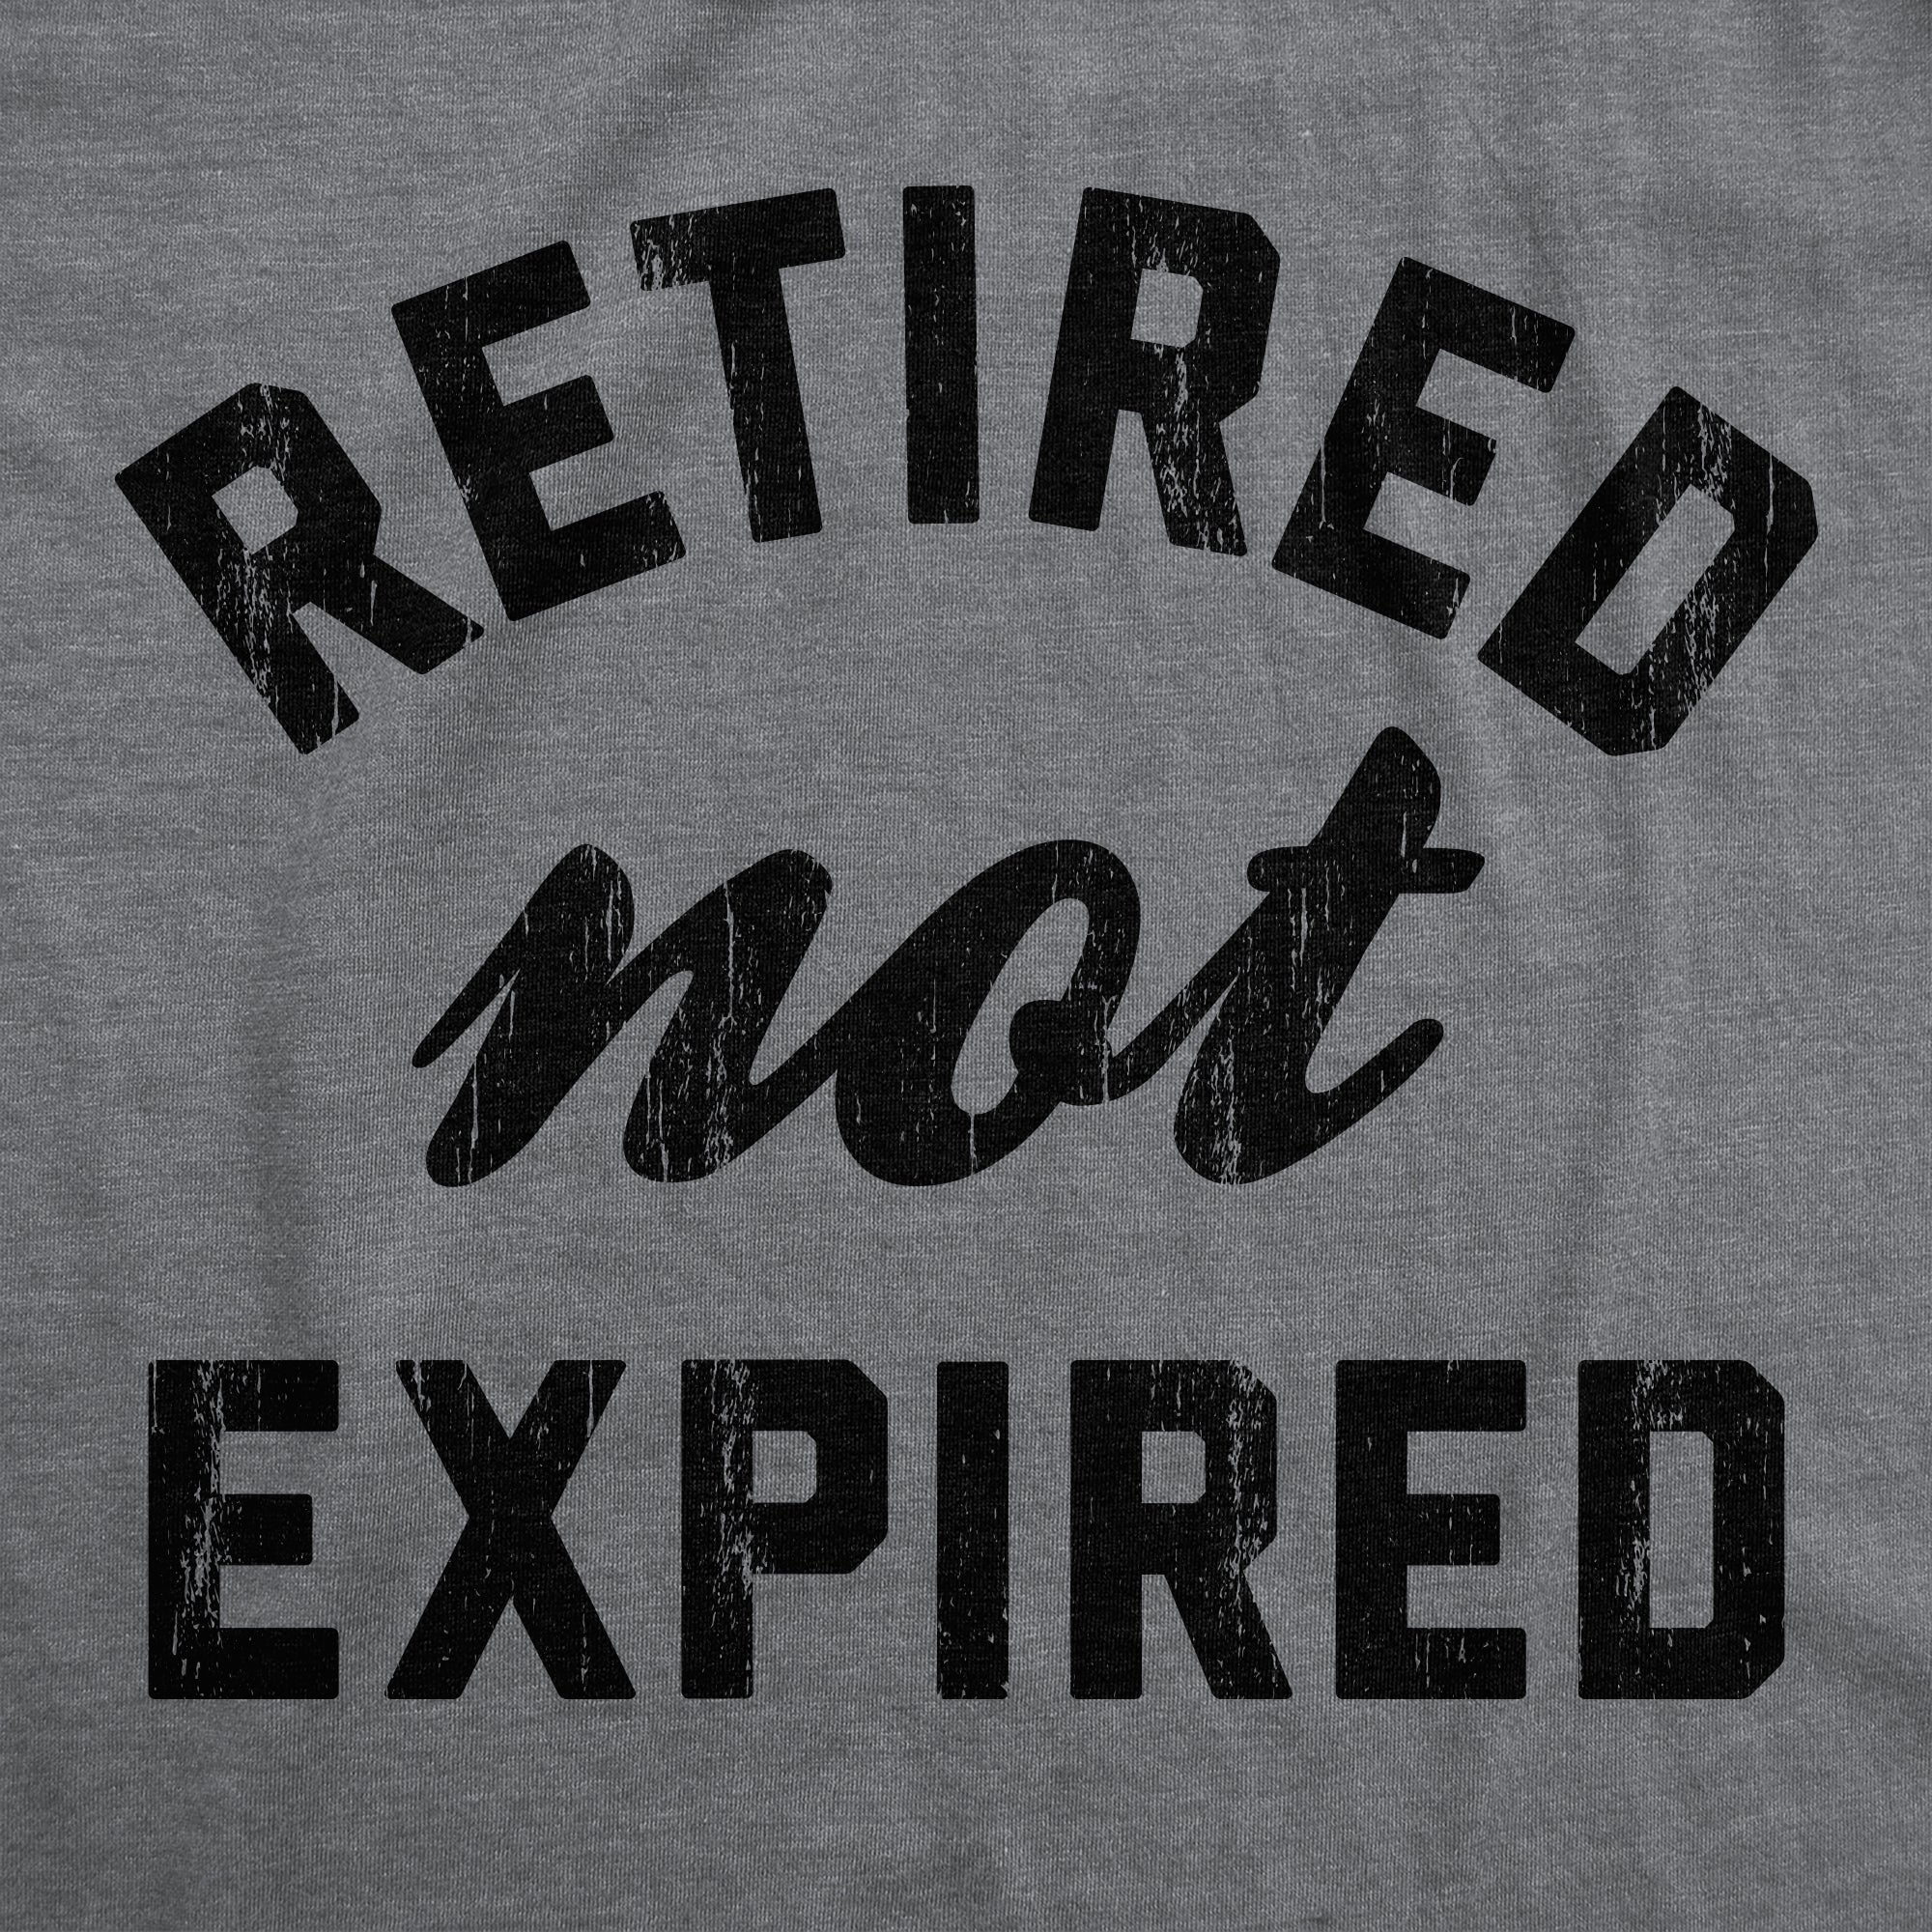 Funny Dark Heather Grey Retired Not Expired Mens T Shirt Nerdy office Tee